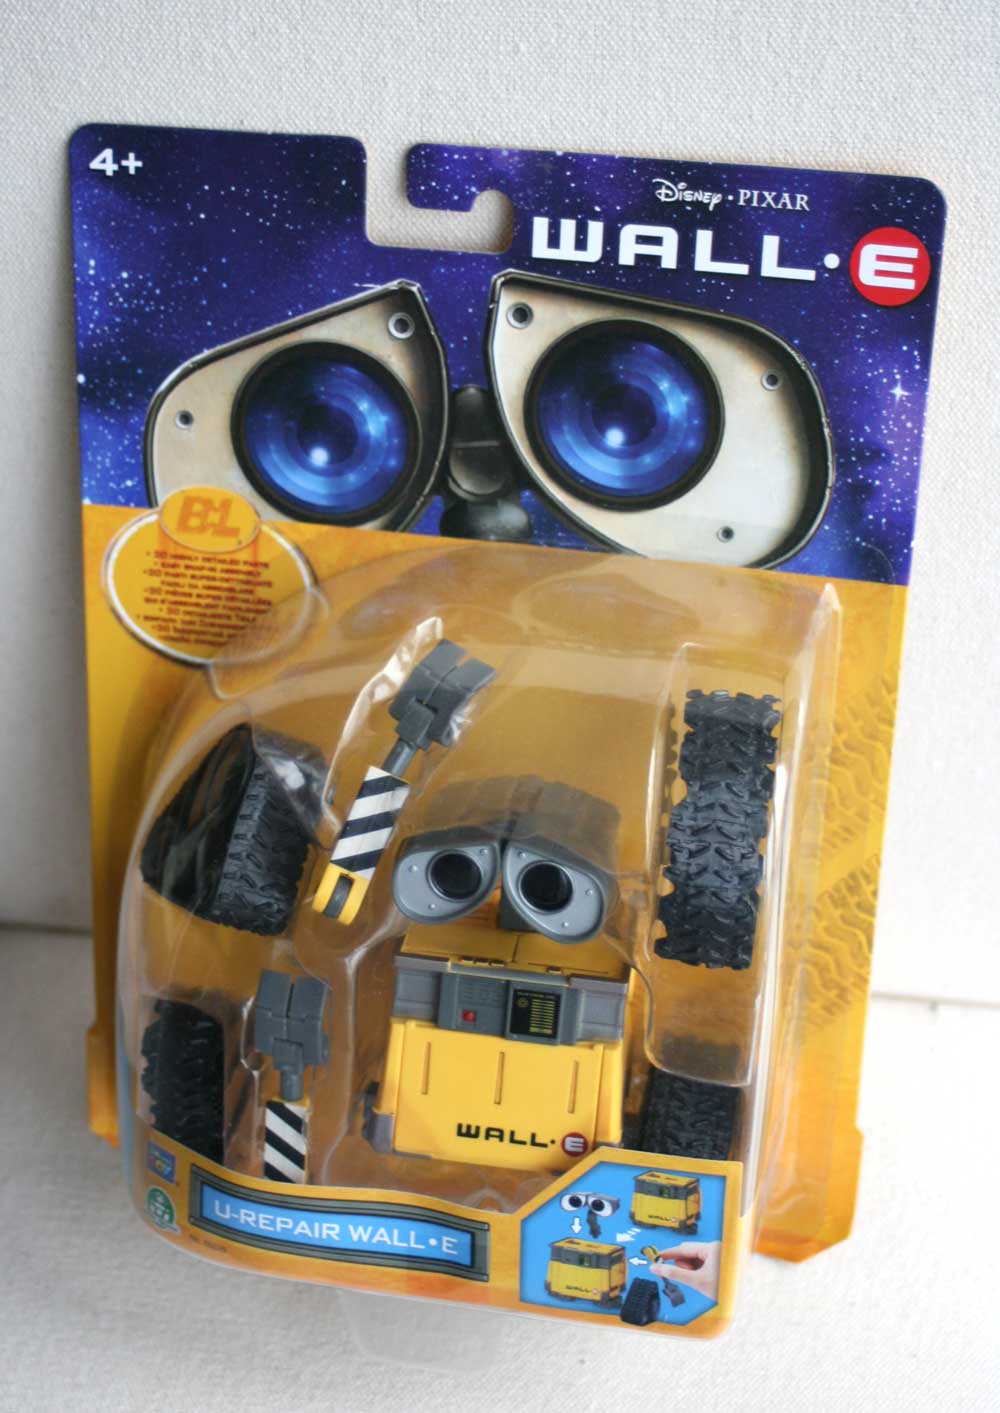 U-Repair Wall-E (2008) packaging